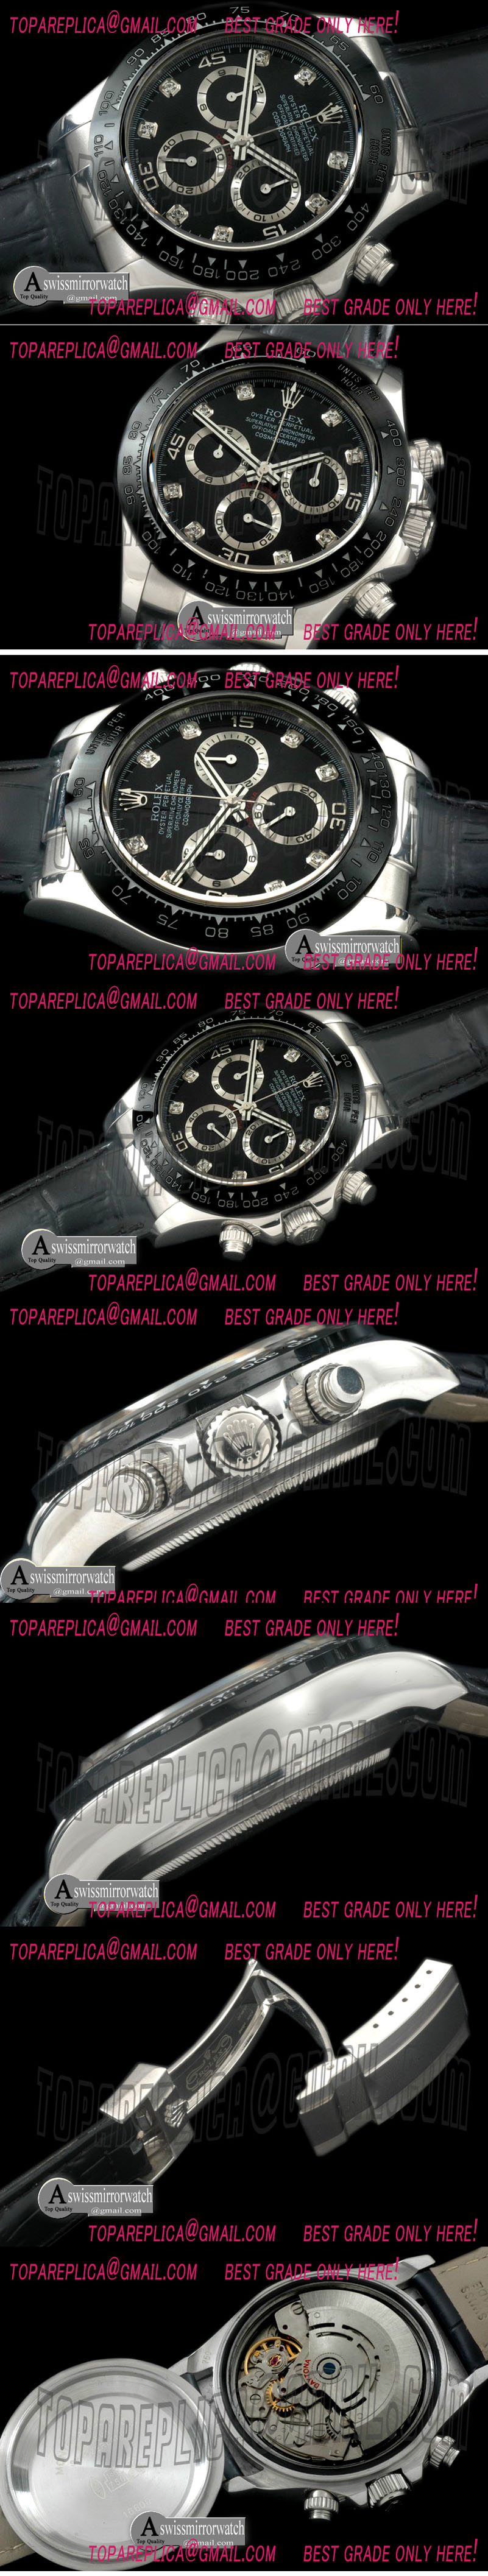 Replica Rolex Daytona Watches